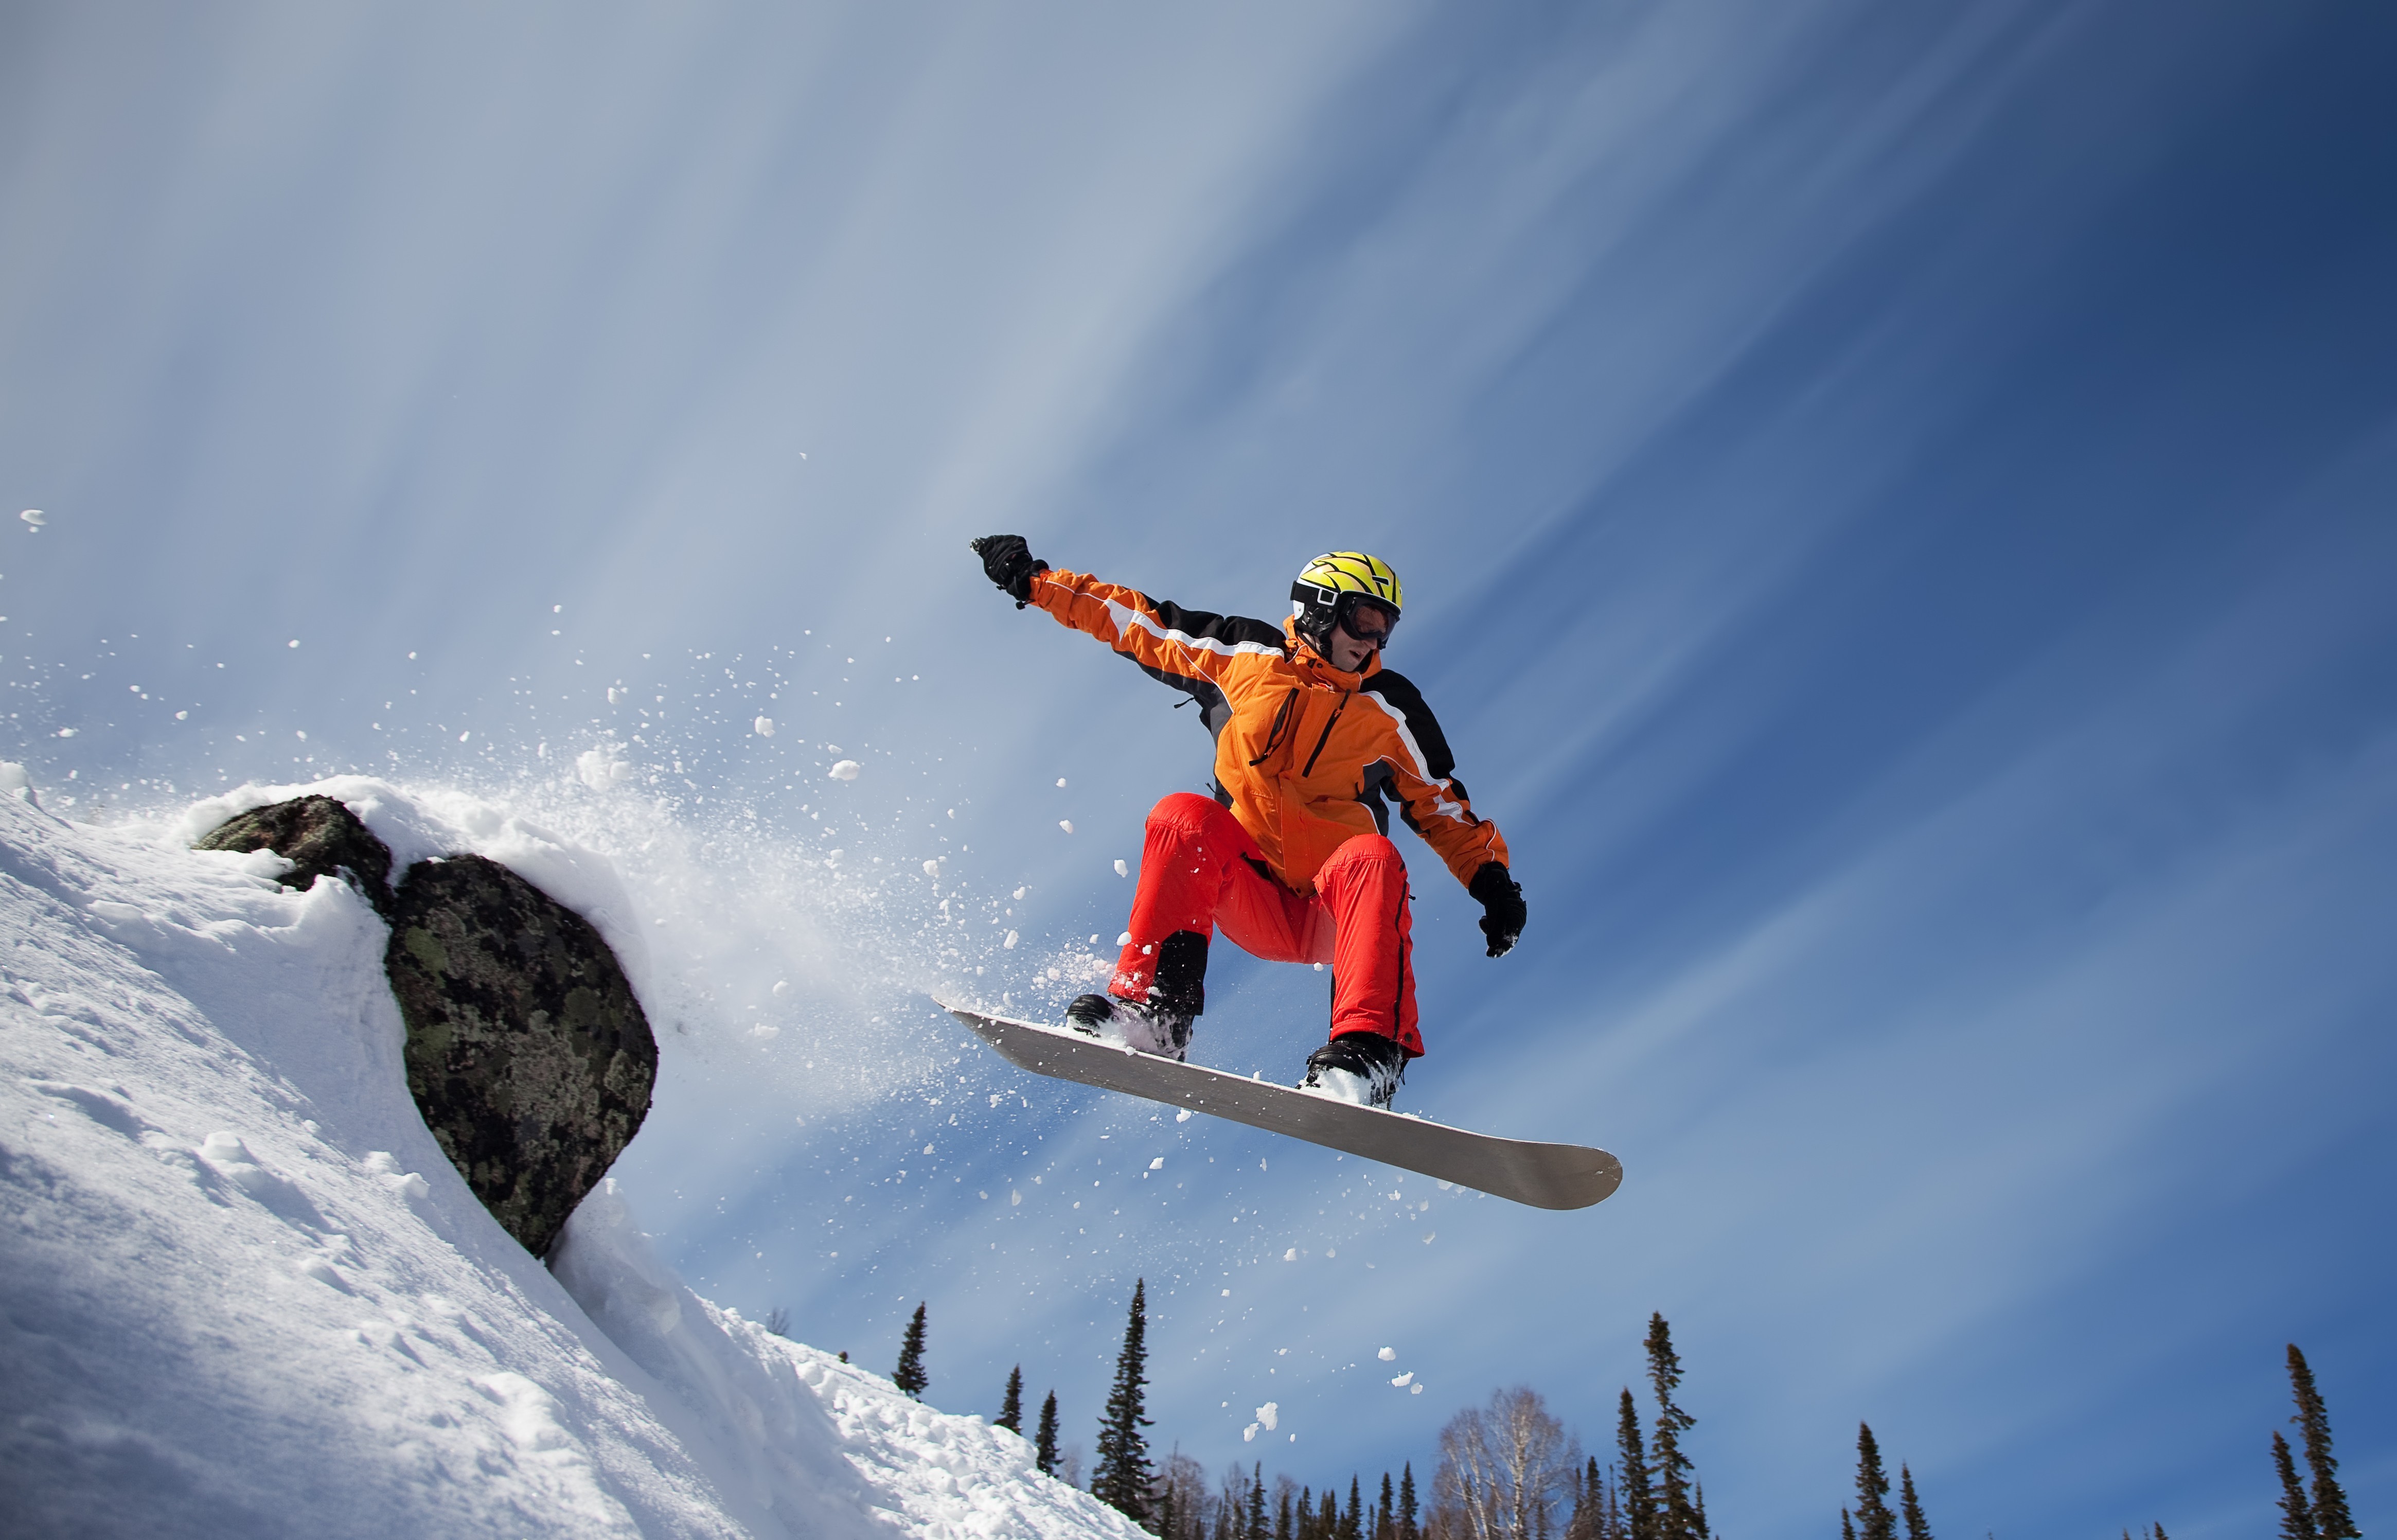 Go snowboarding. Сноуборд. Зимний спорт. Сноубординг вид спорта. Сноуборд спорт.